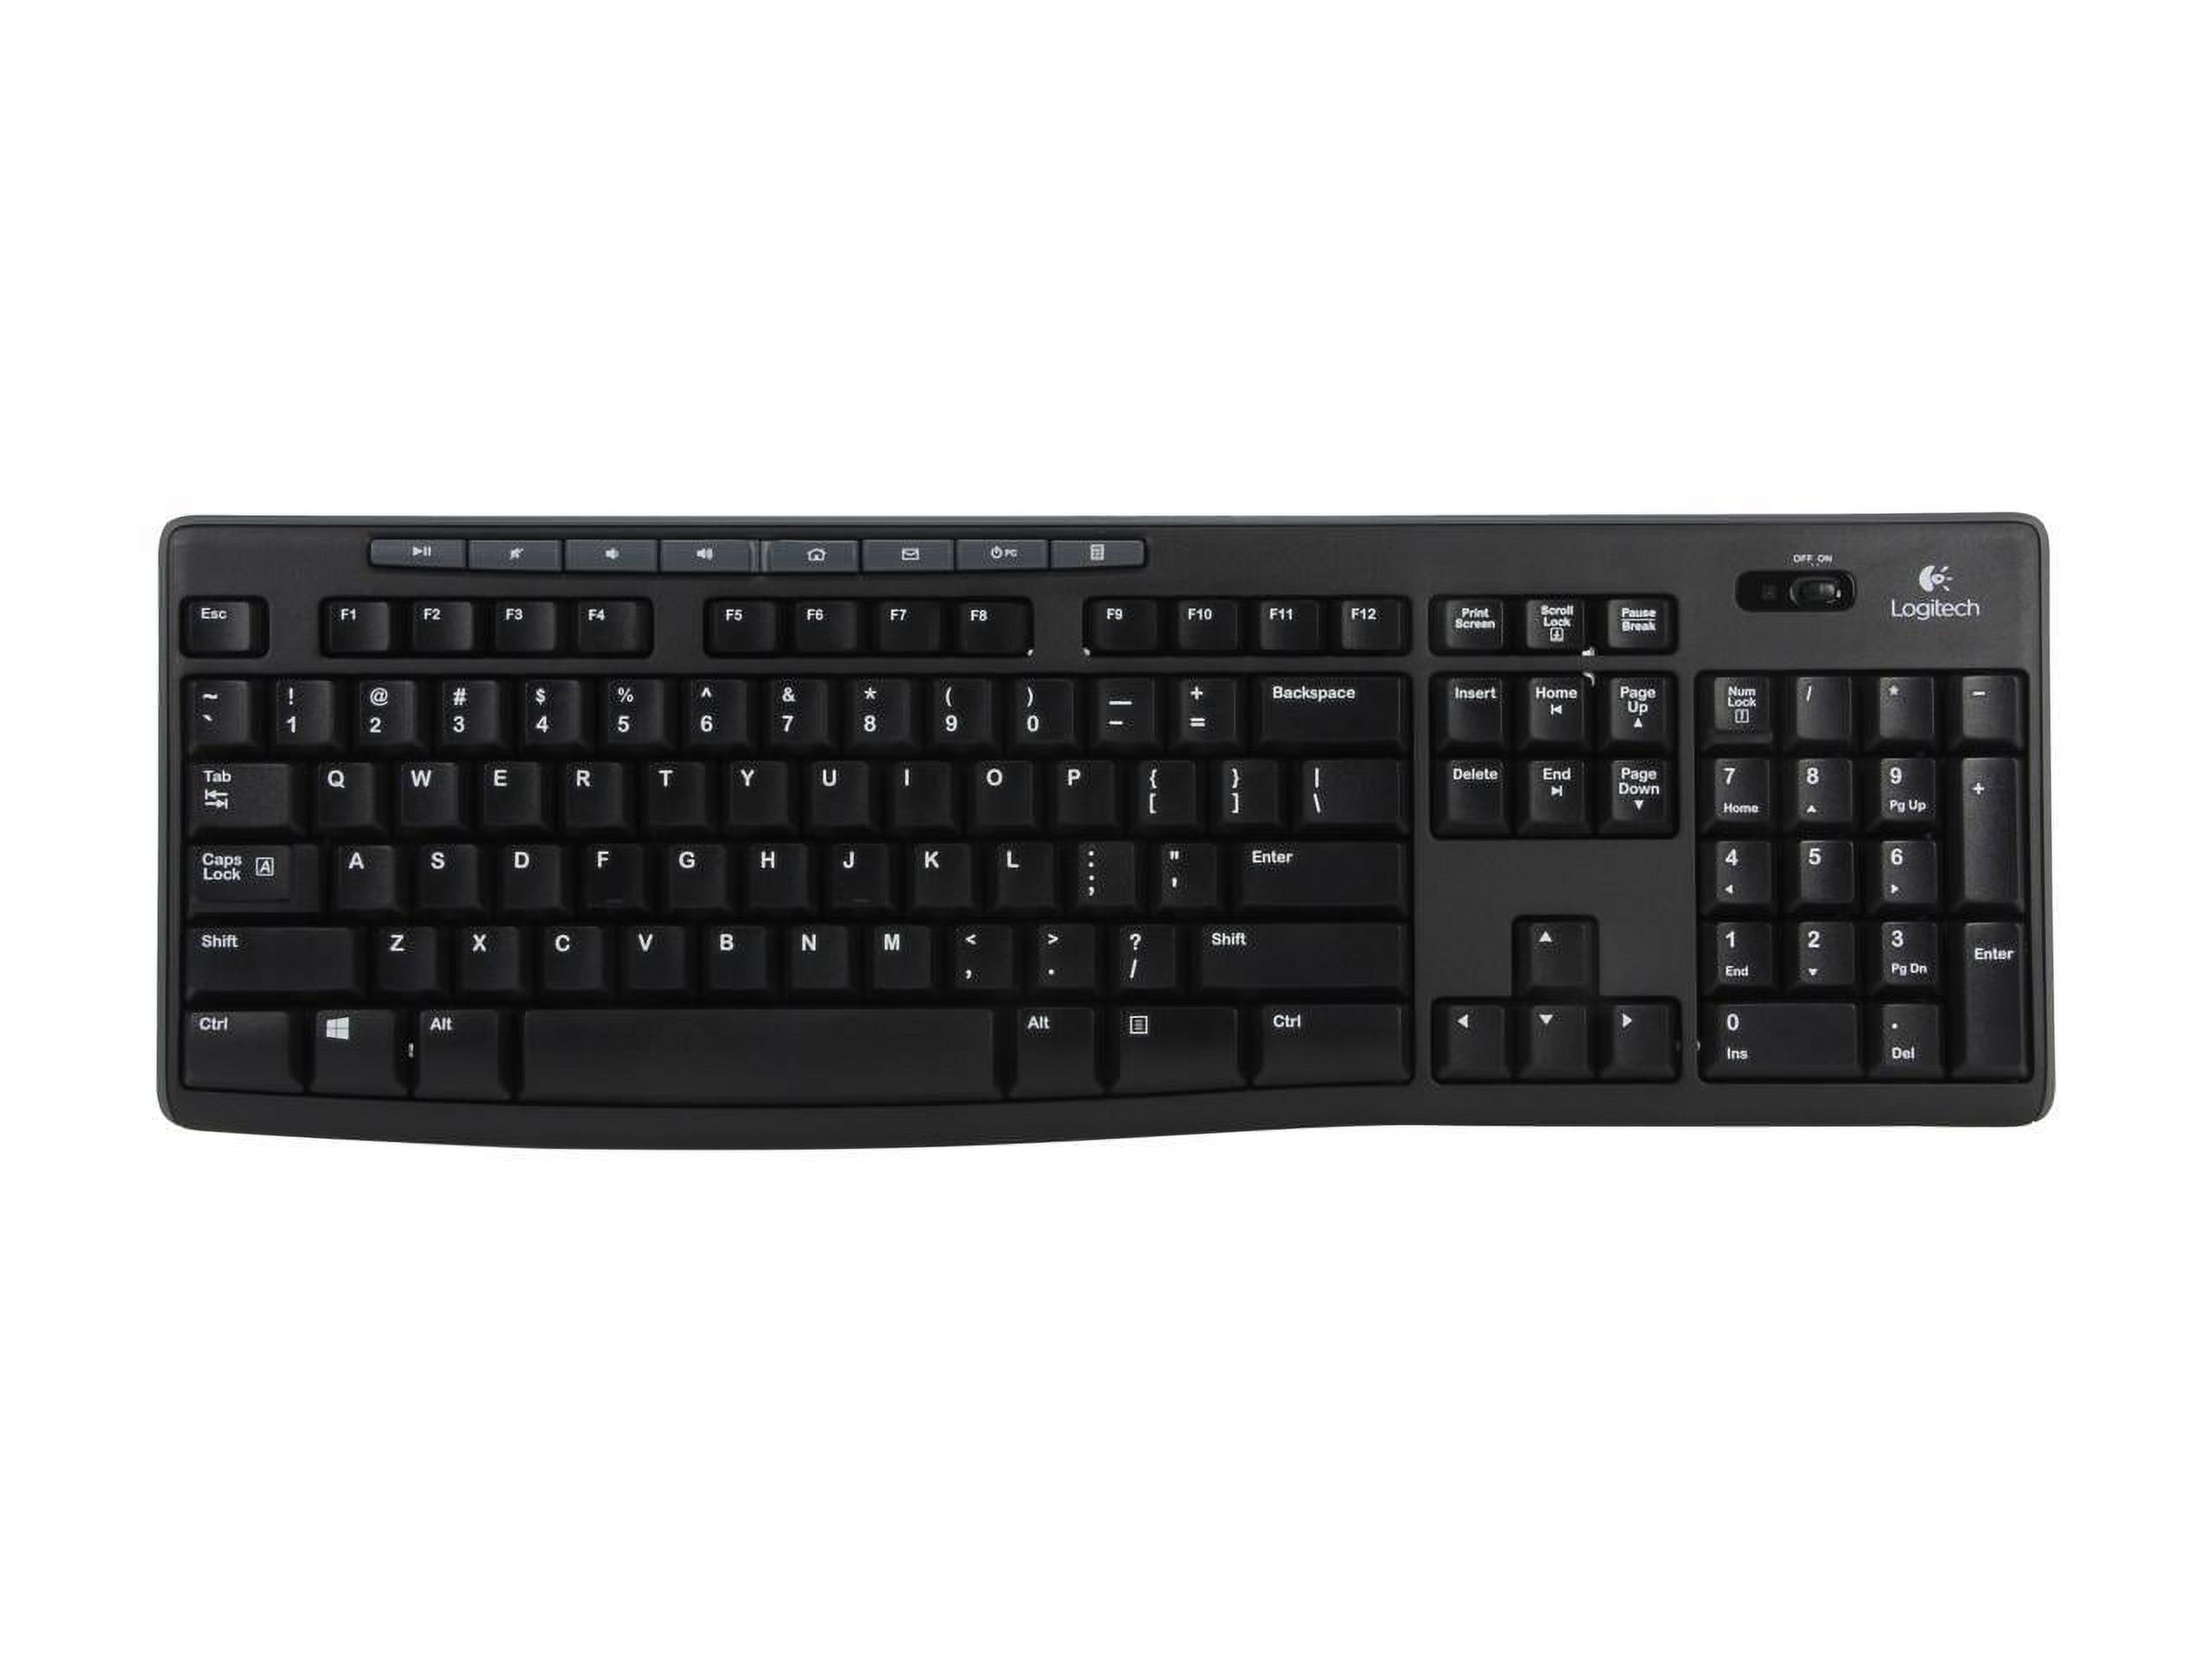 Logitech 920-004536 Mk270 Keyboard Mouse USB Wireless Combo - Black - image 2 of 6